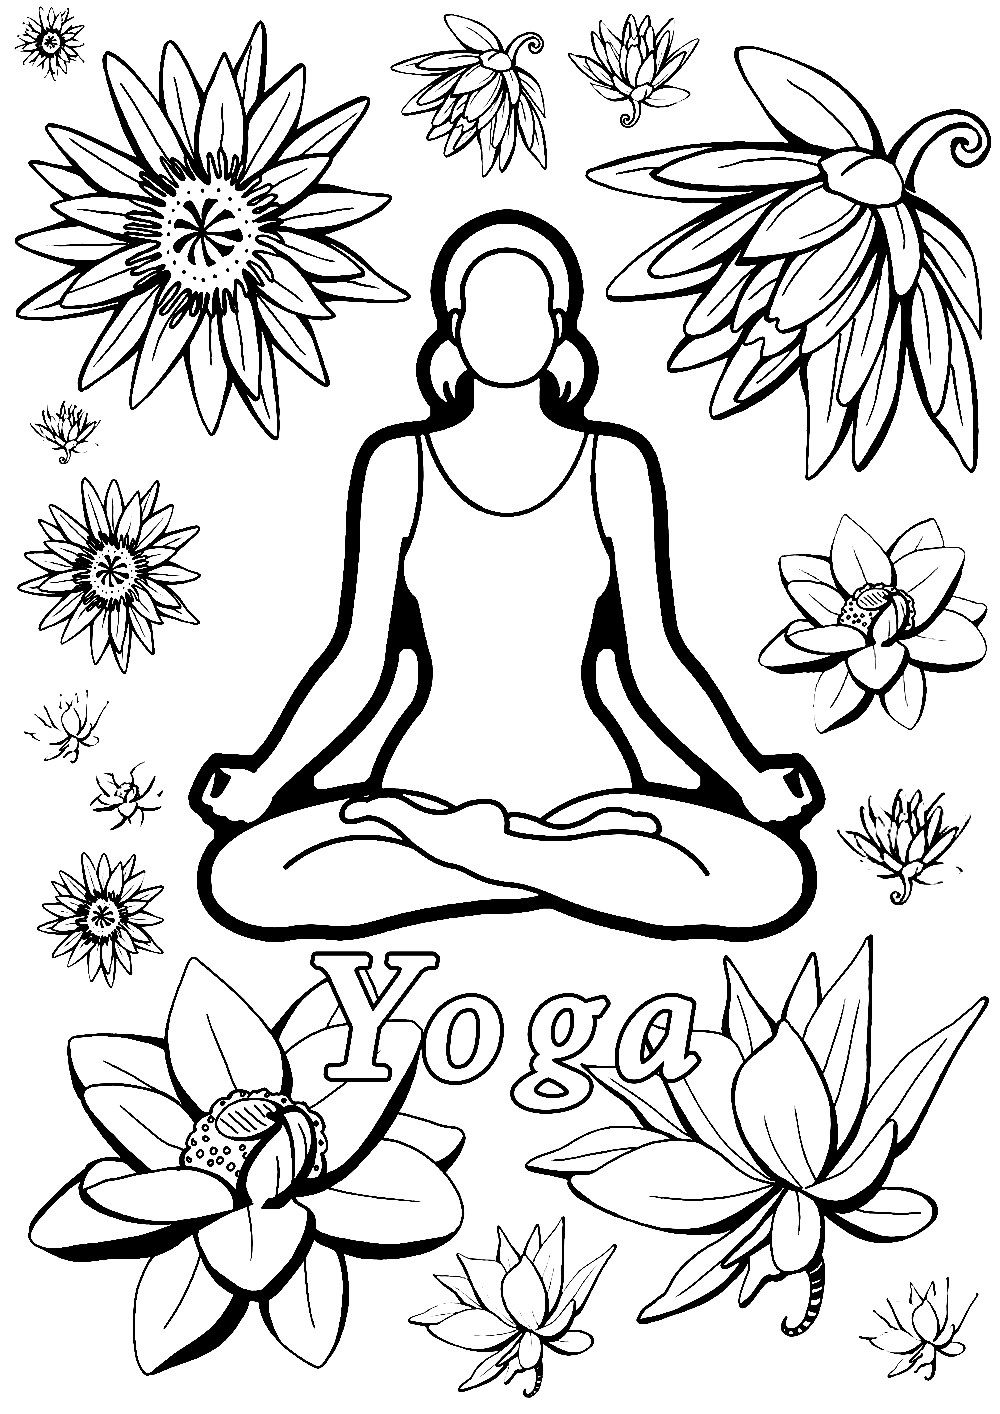 Yoga Vrij van yoga